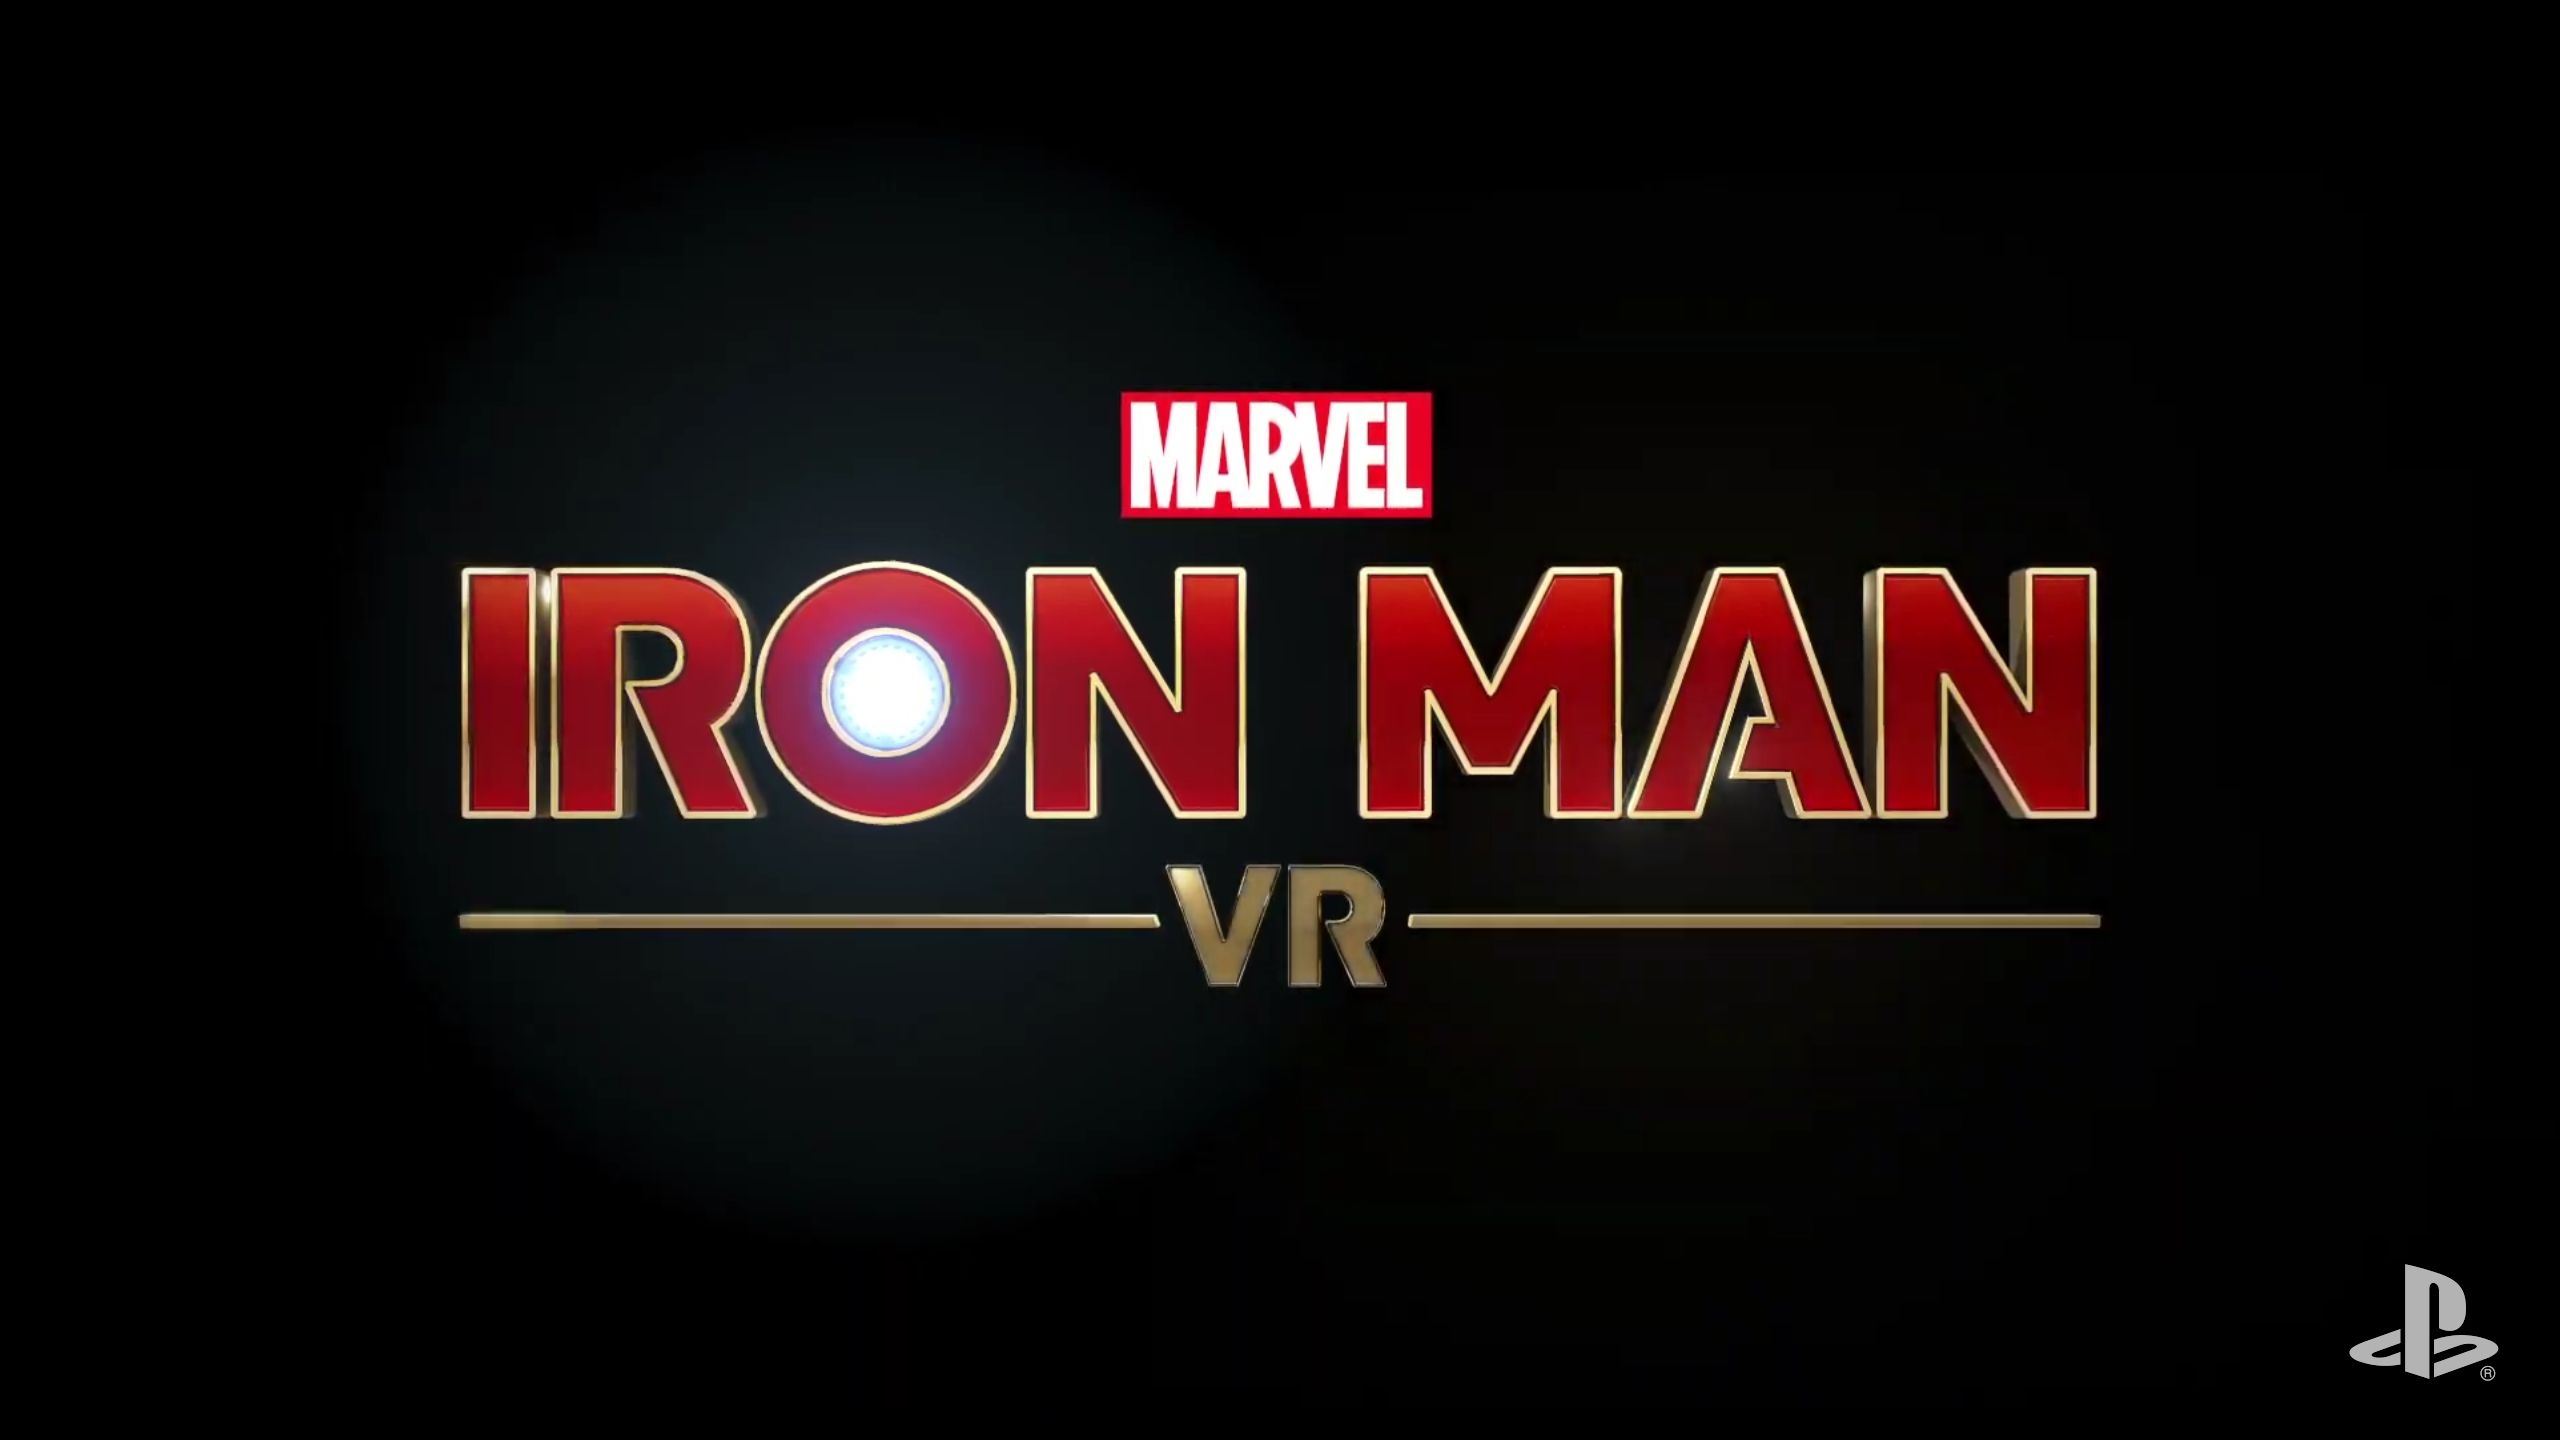 Iron Man VR coming 2019